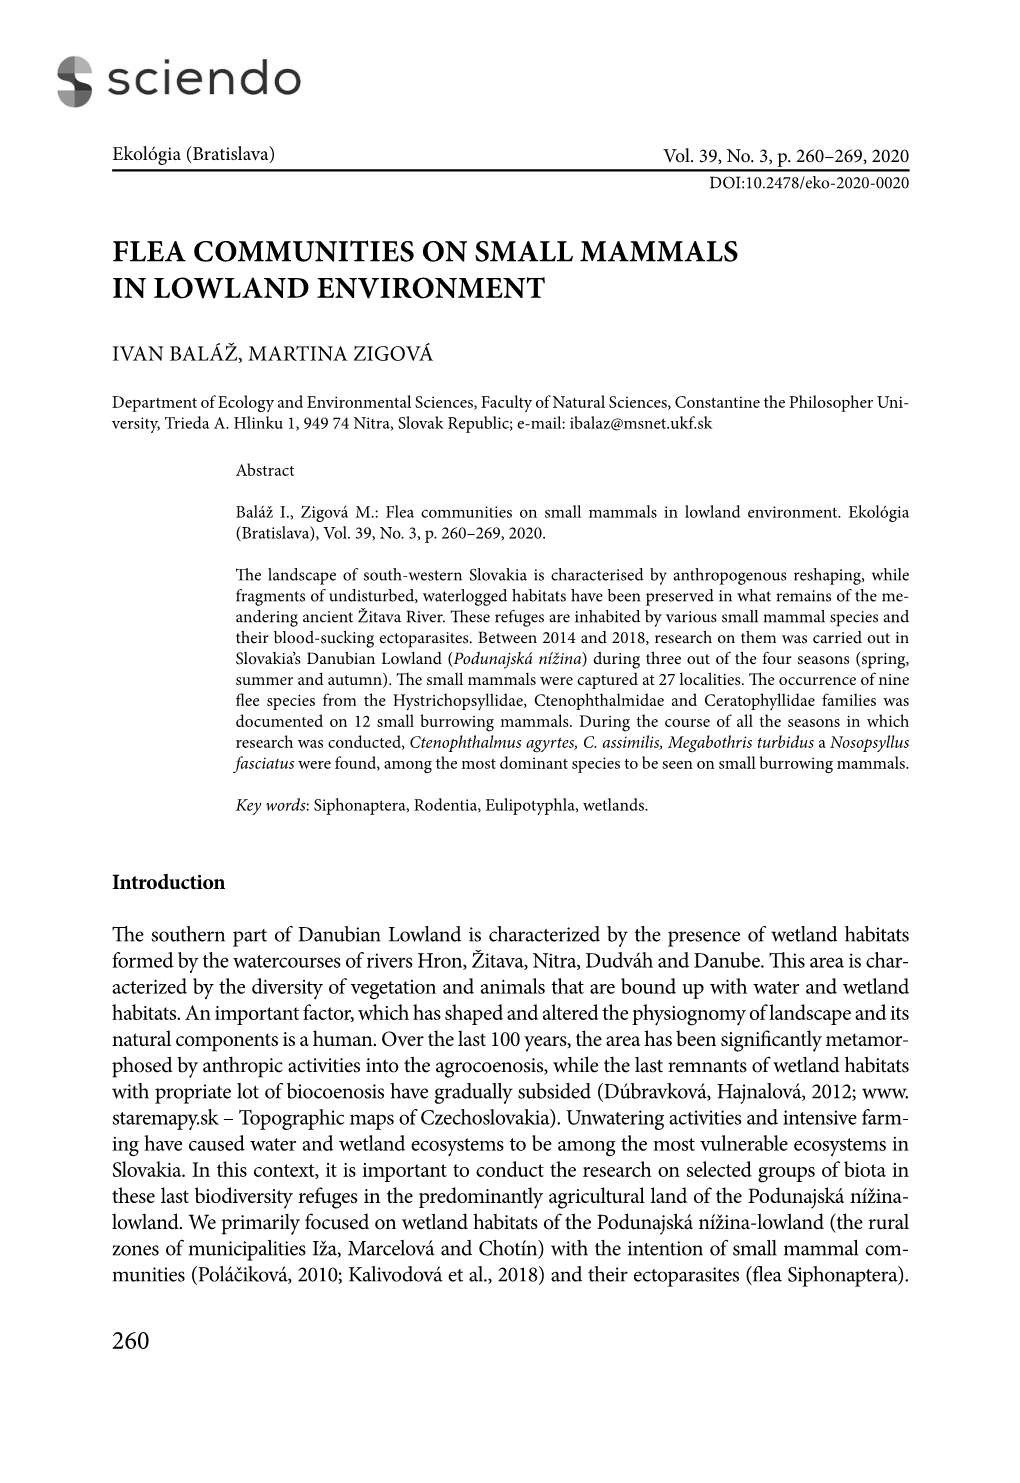 Flea Communities on Small Mammals in Lowland Environment